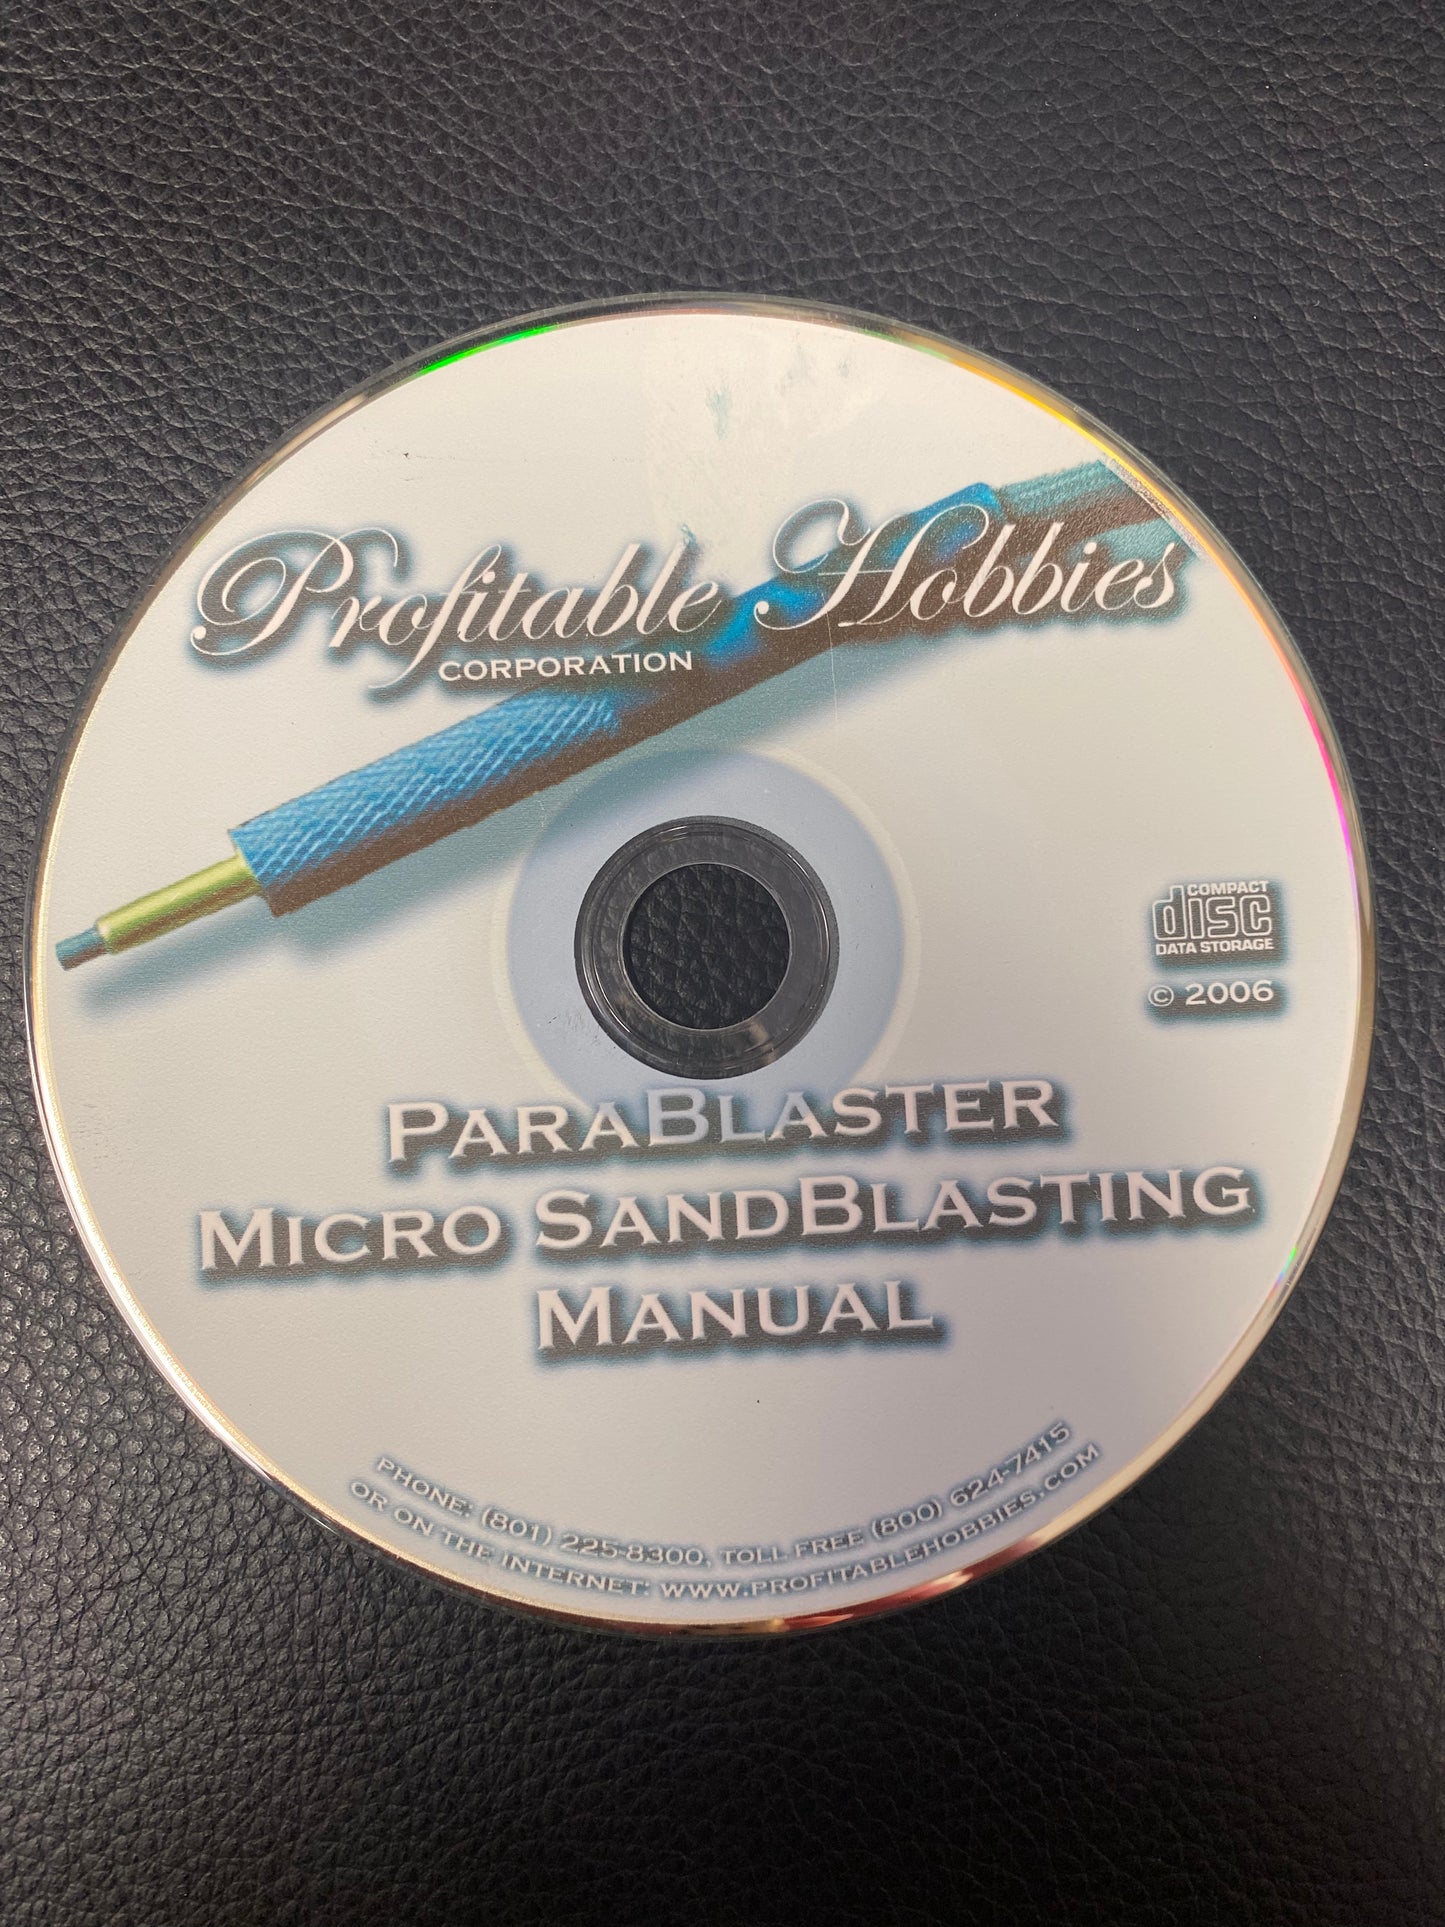 Parablaster Manual